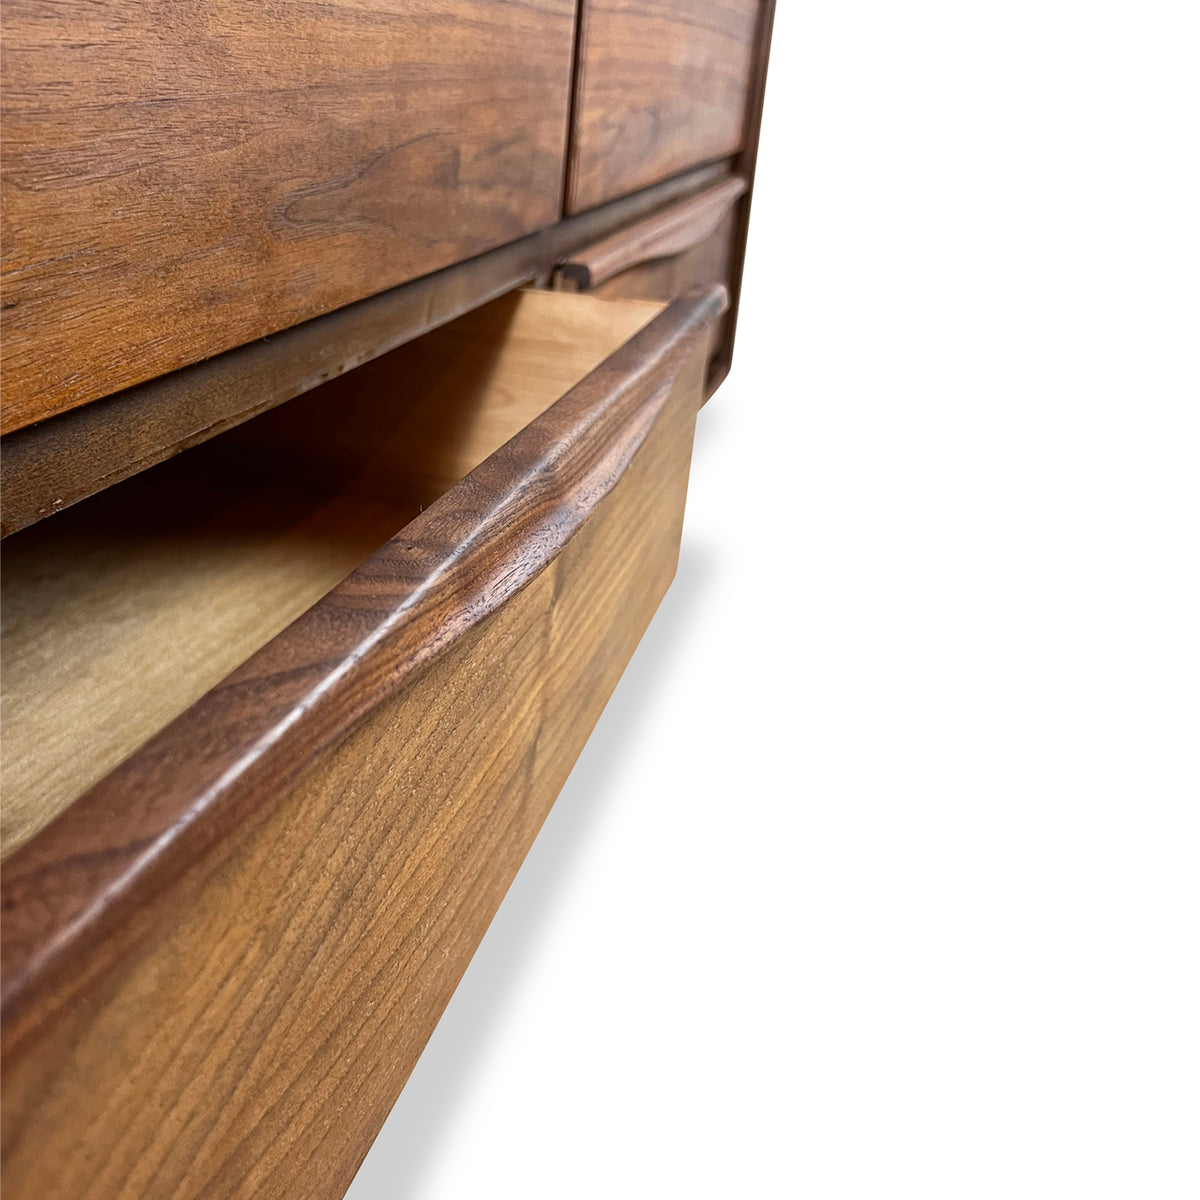 Walnut Nine Drawer Dresser